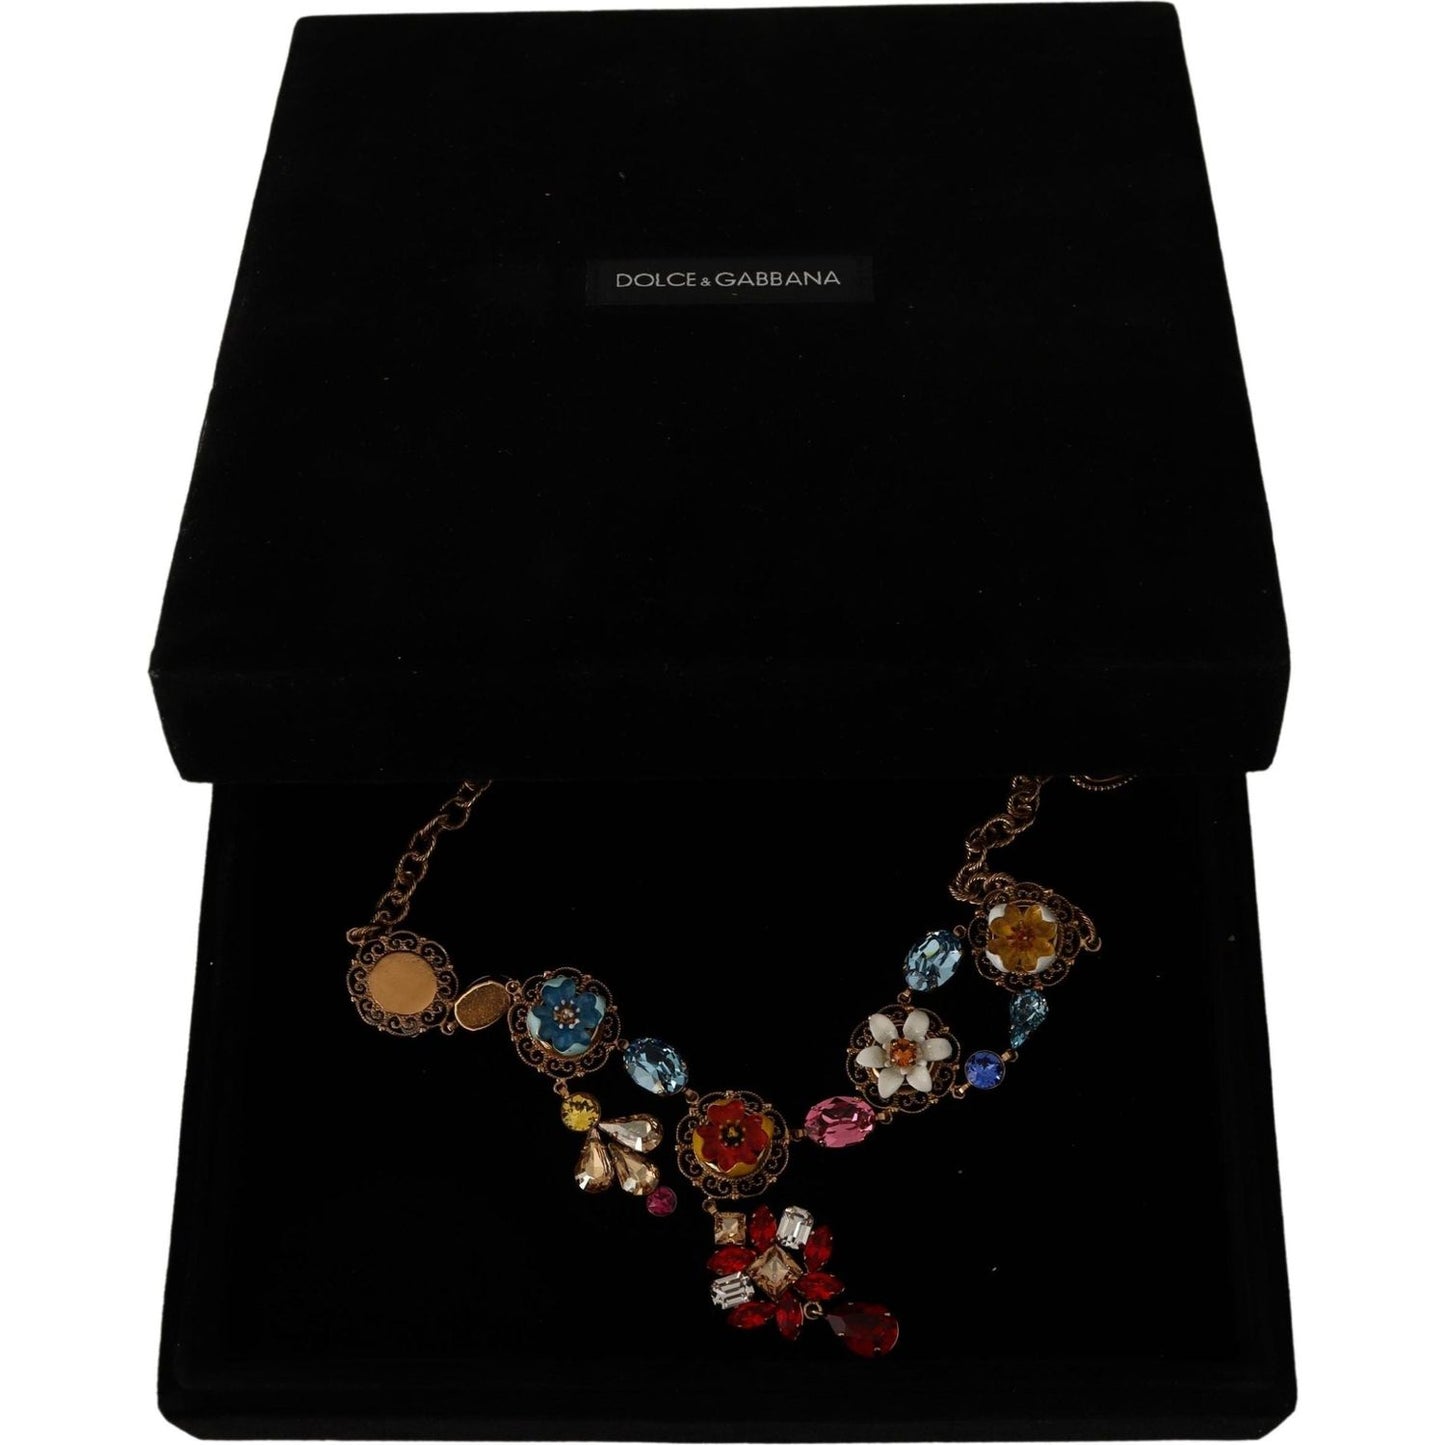 Dolce & Gabbana Elegant Floral Statement Necklace gold-brass-floral-sicily-charms-statement-necklace WOMAN NECKLACE IMG_2063-scaled-da297a90-d99.jpg